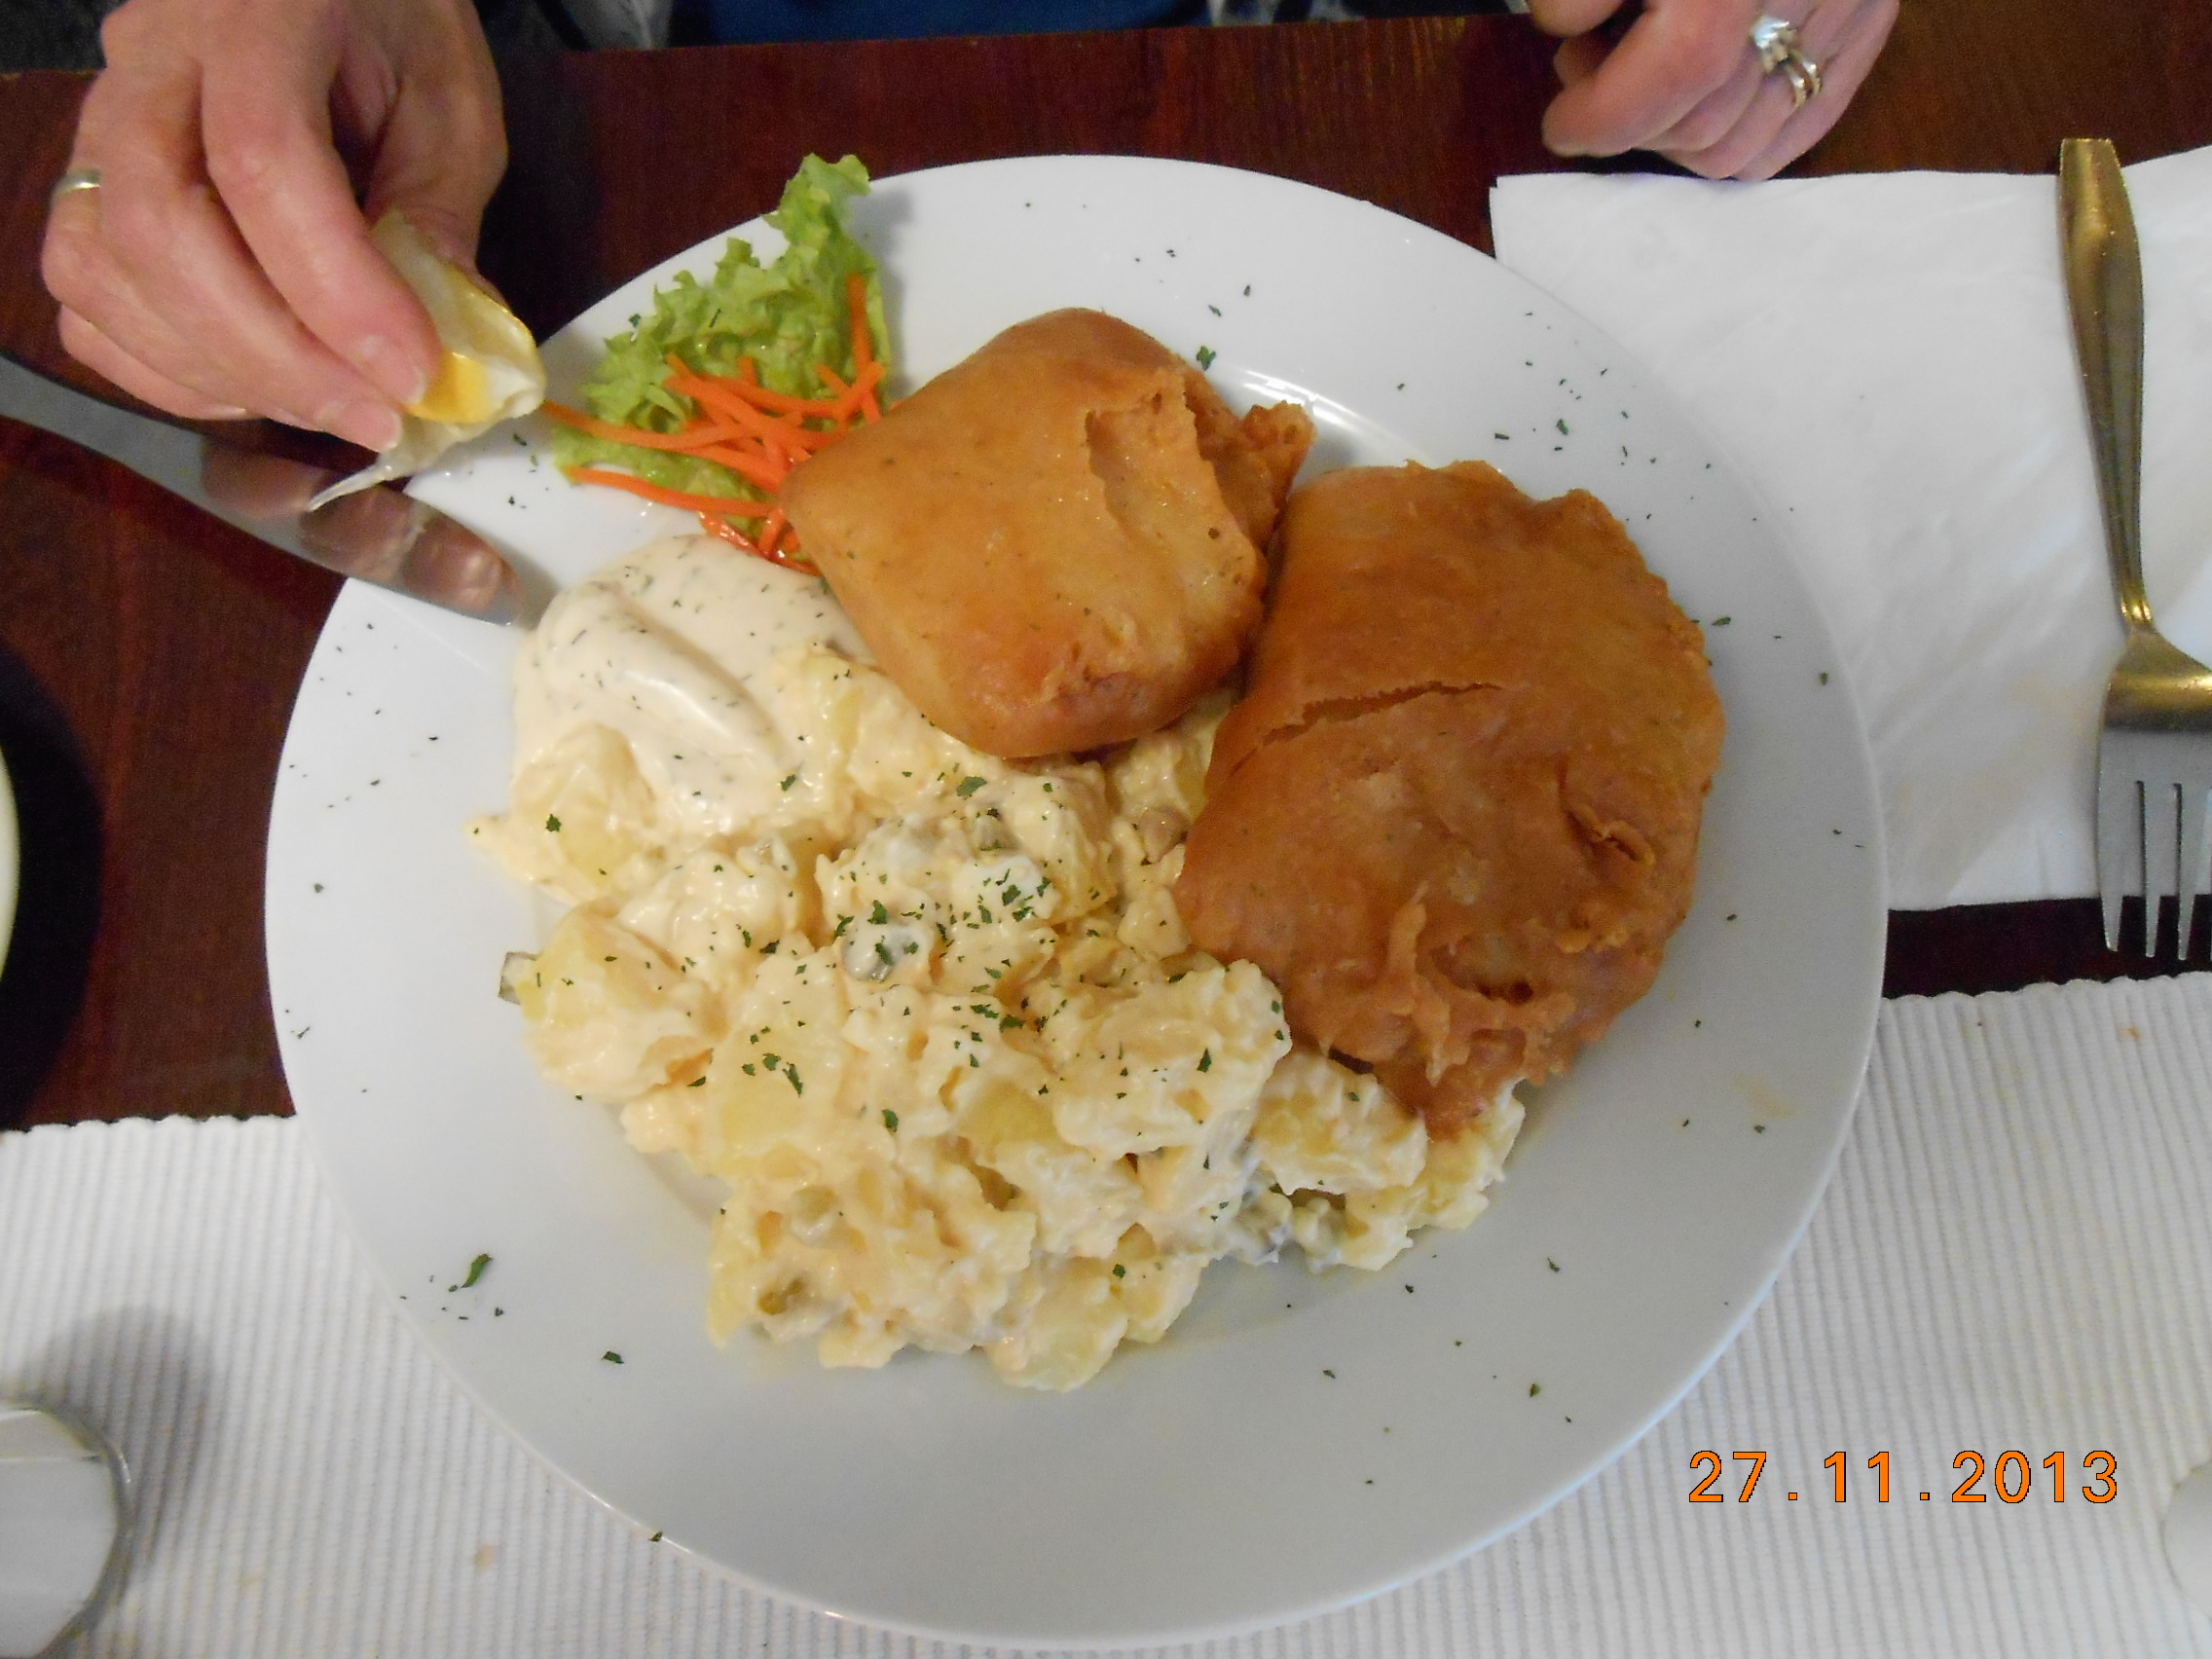 Backfisch mit selbstgemachtem Kartoffelsalat.